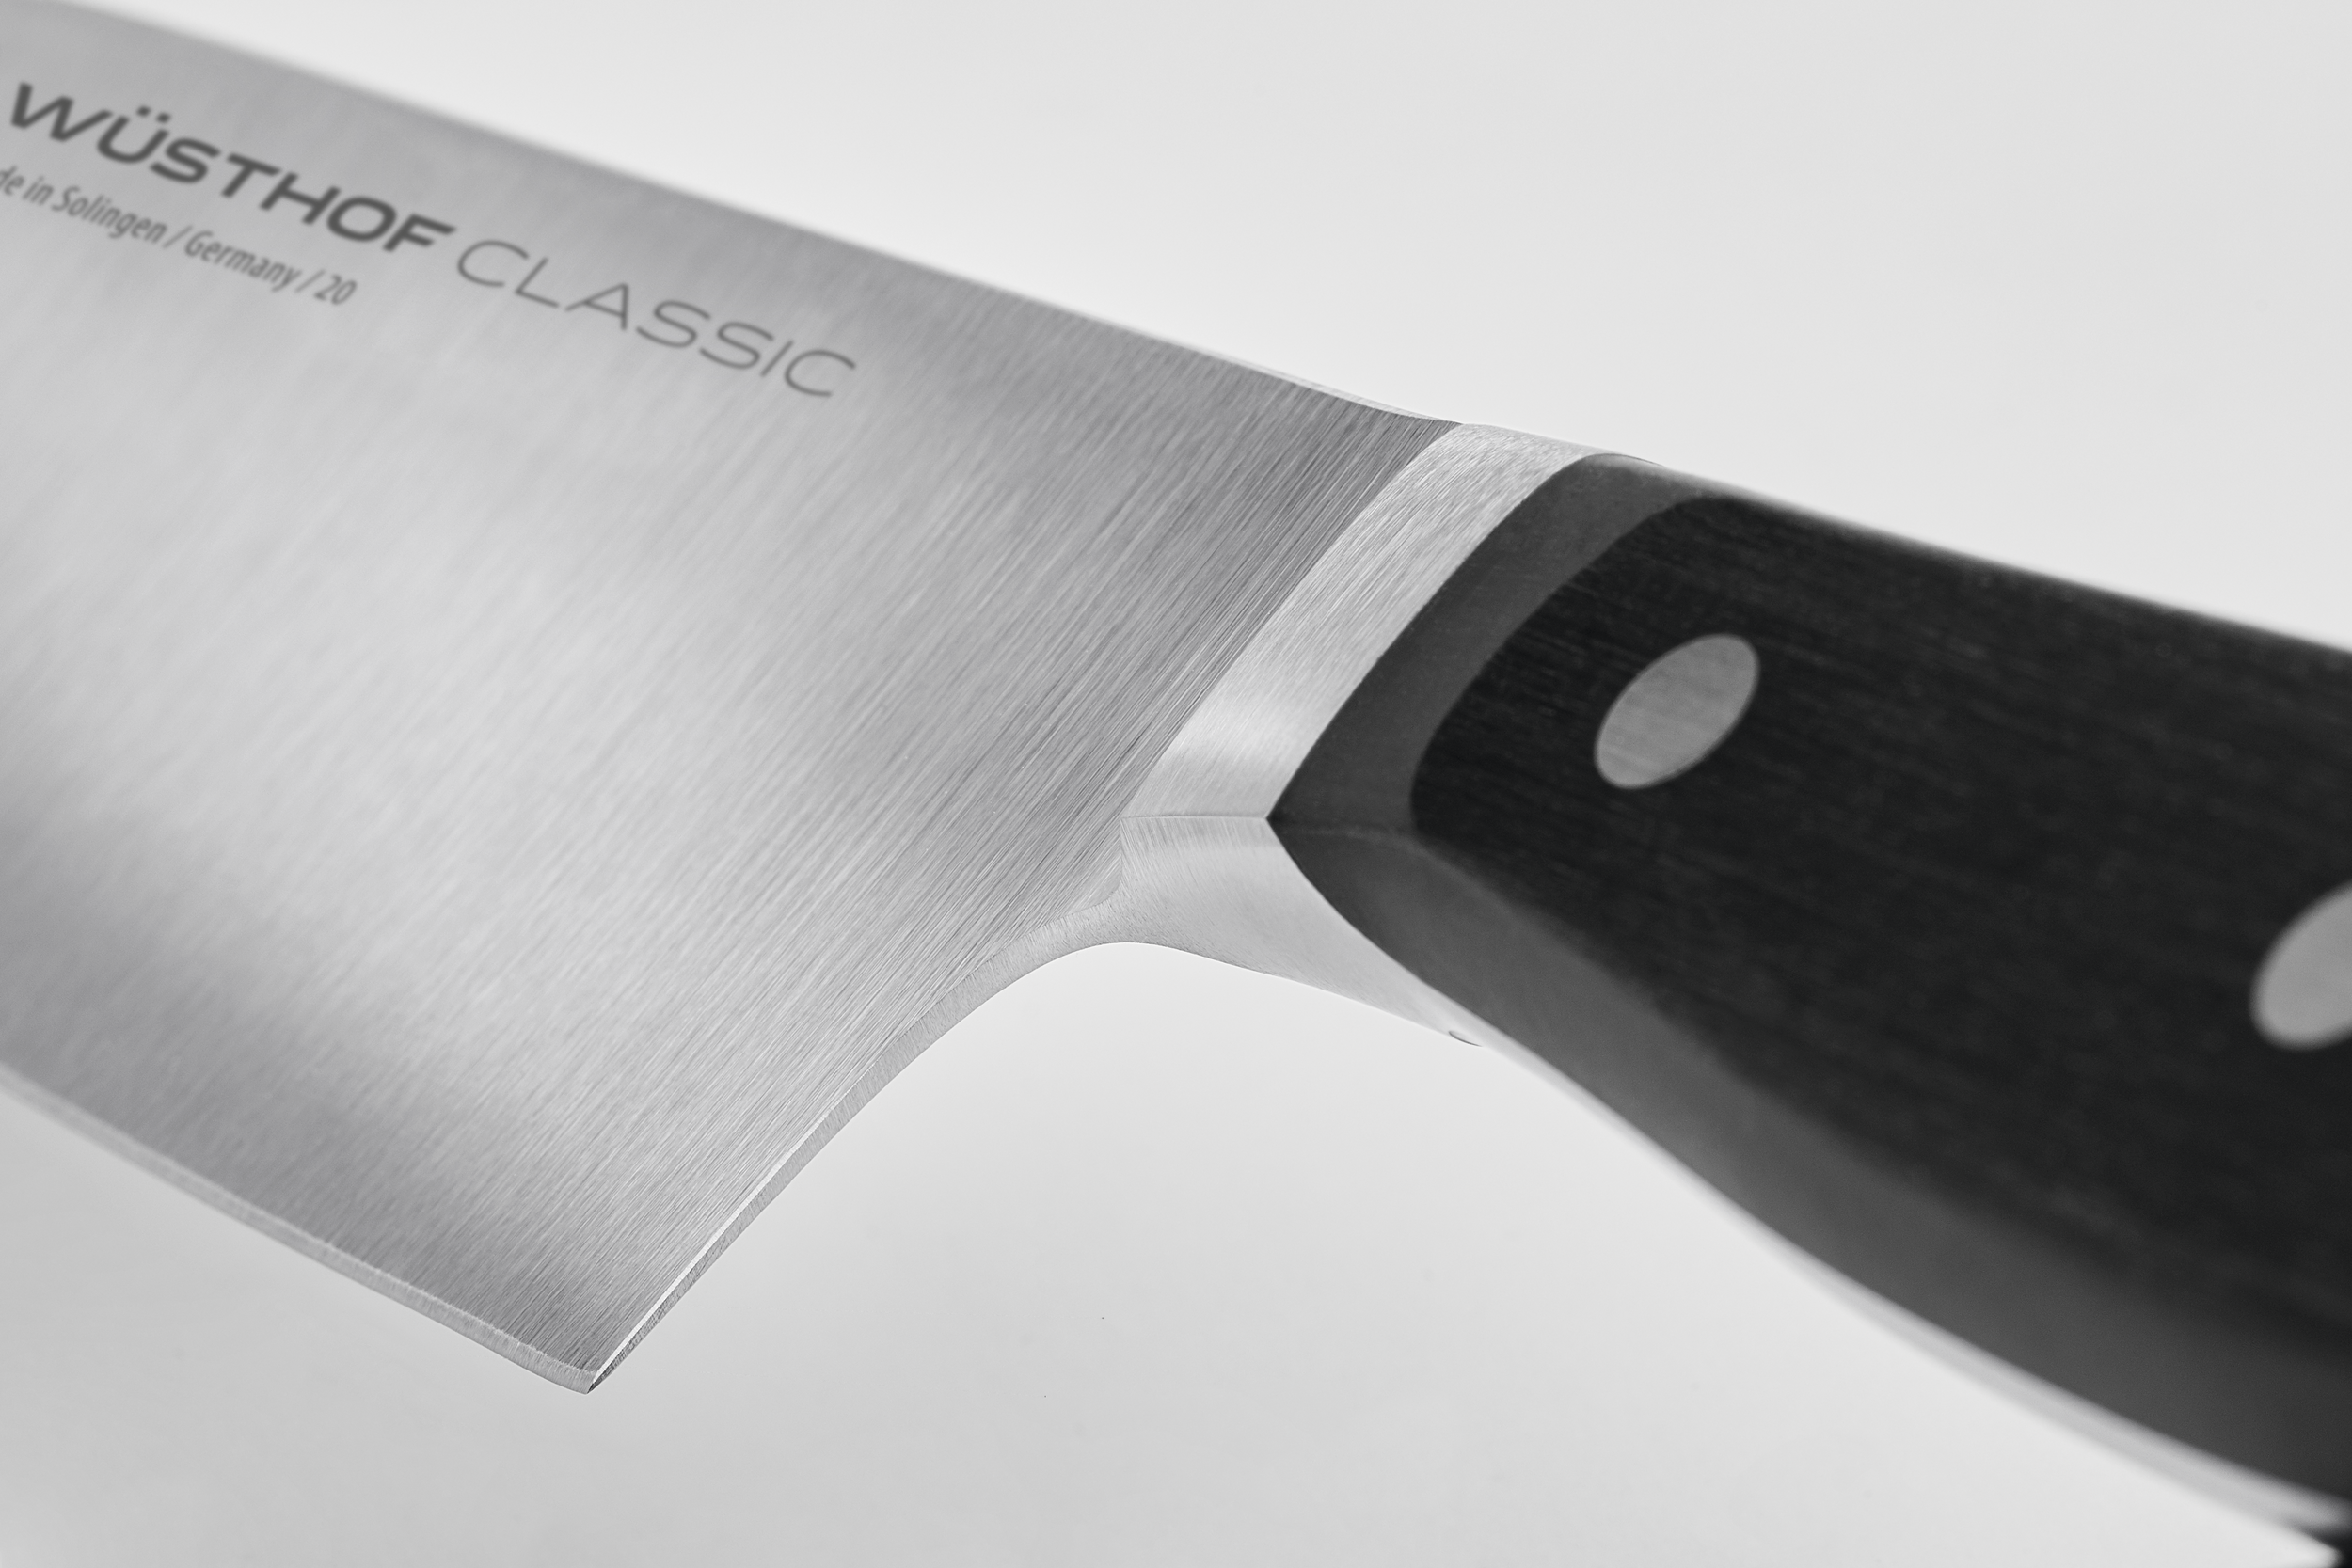 Wüsthof Classic 8 Cook's Knife